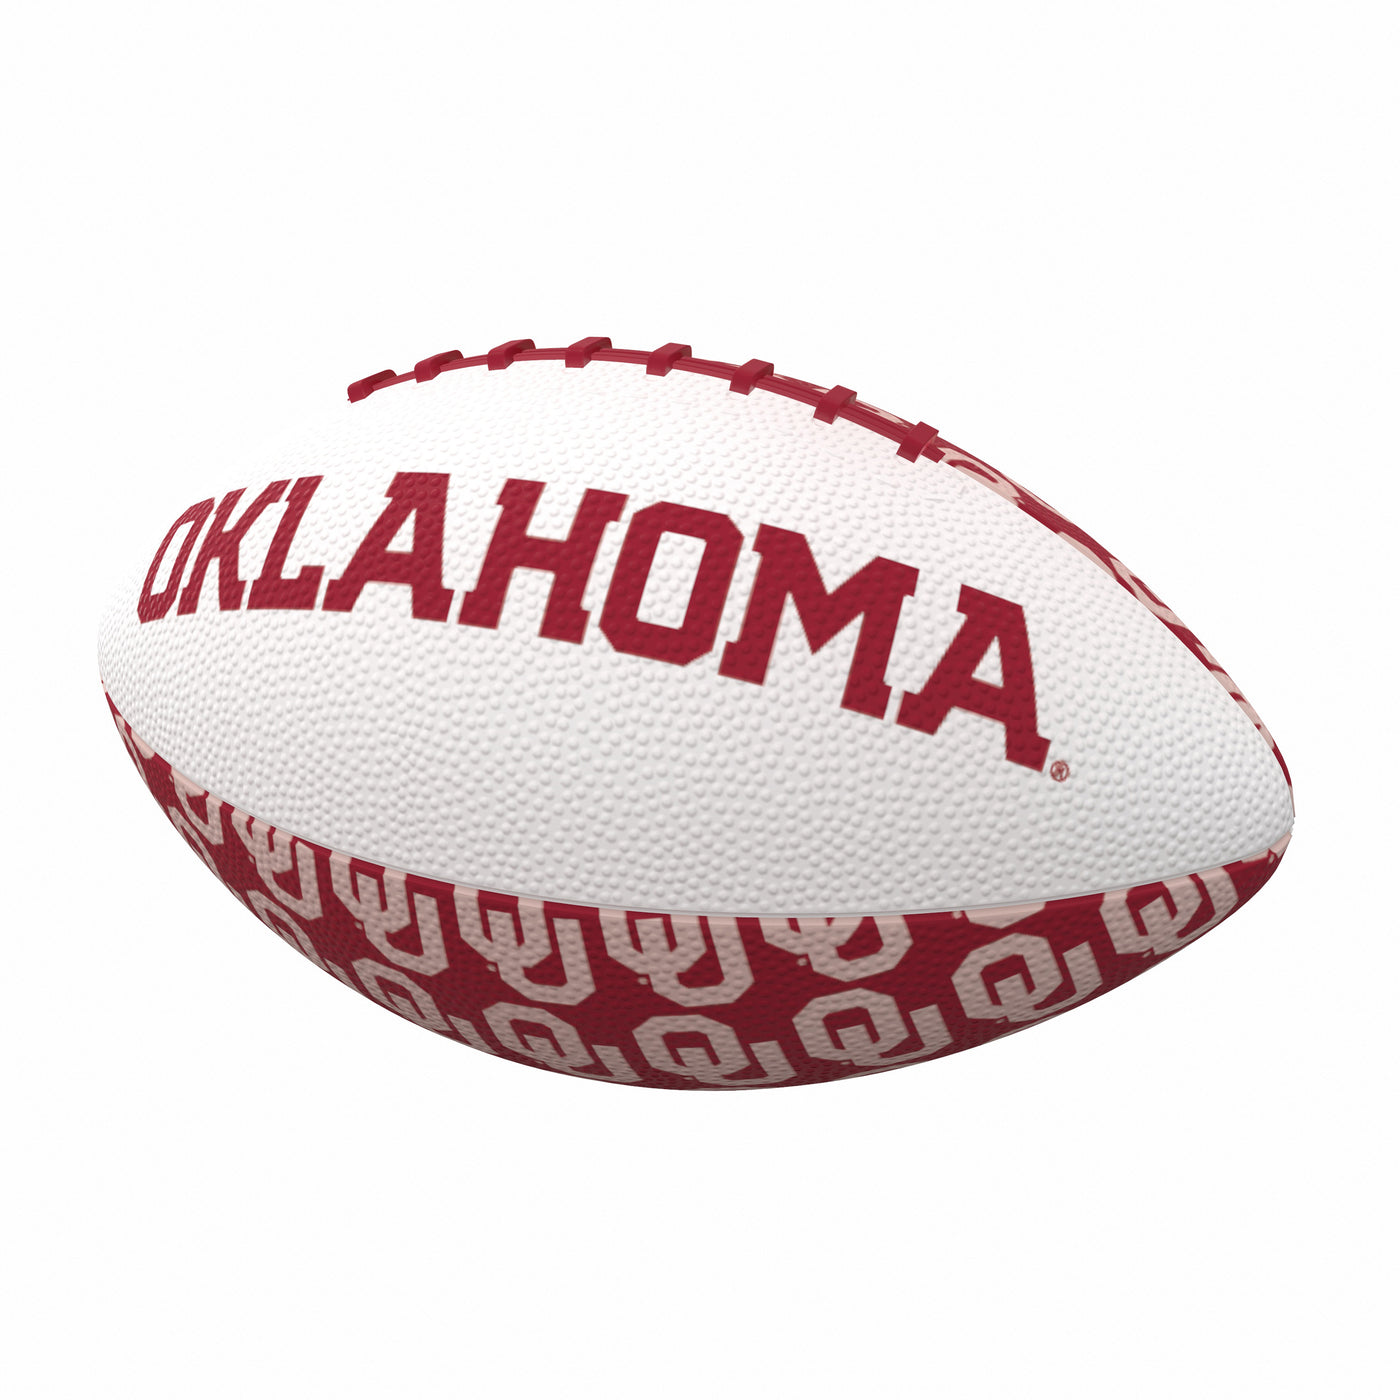 Oklahoma Repeating Mini-Size Rubber Football